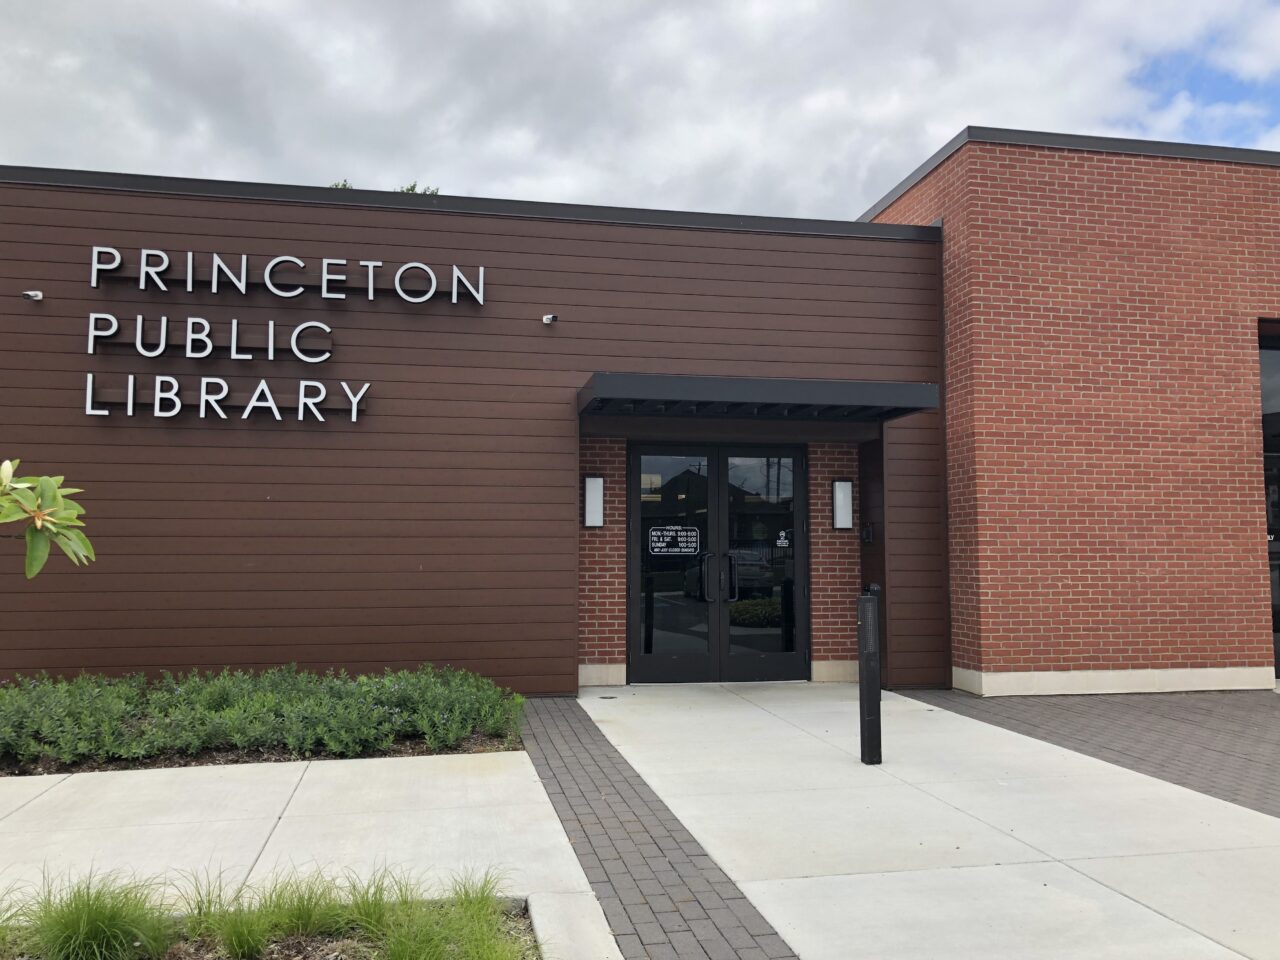 modern brick entryway marked Princeton Public Library